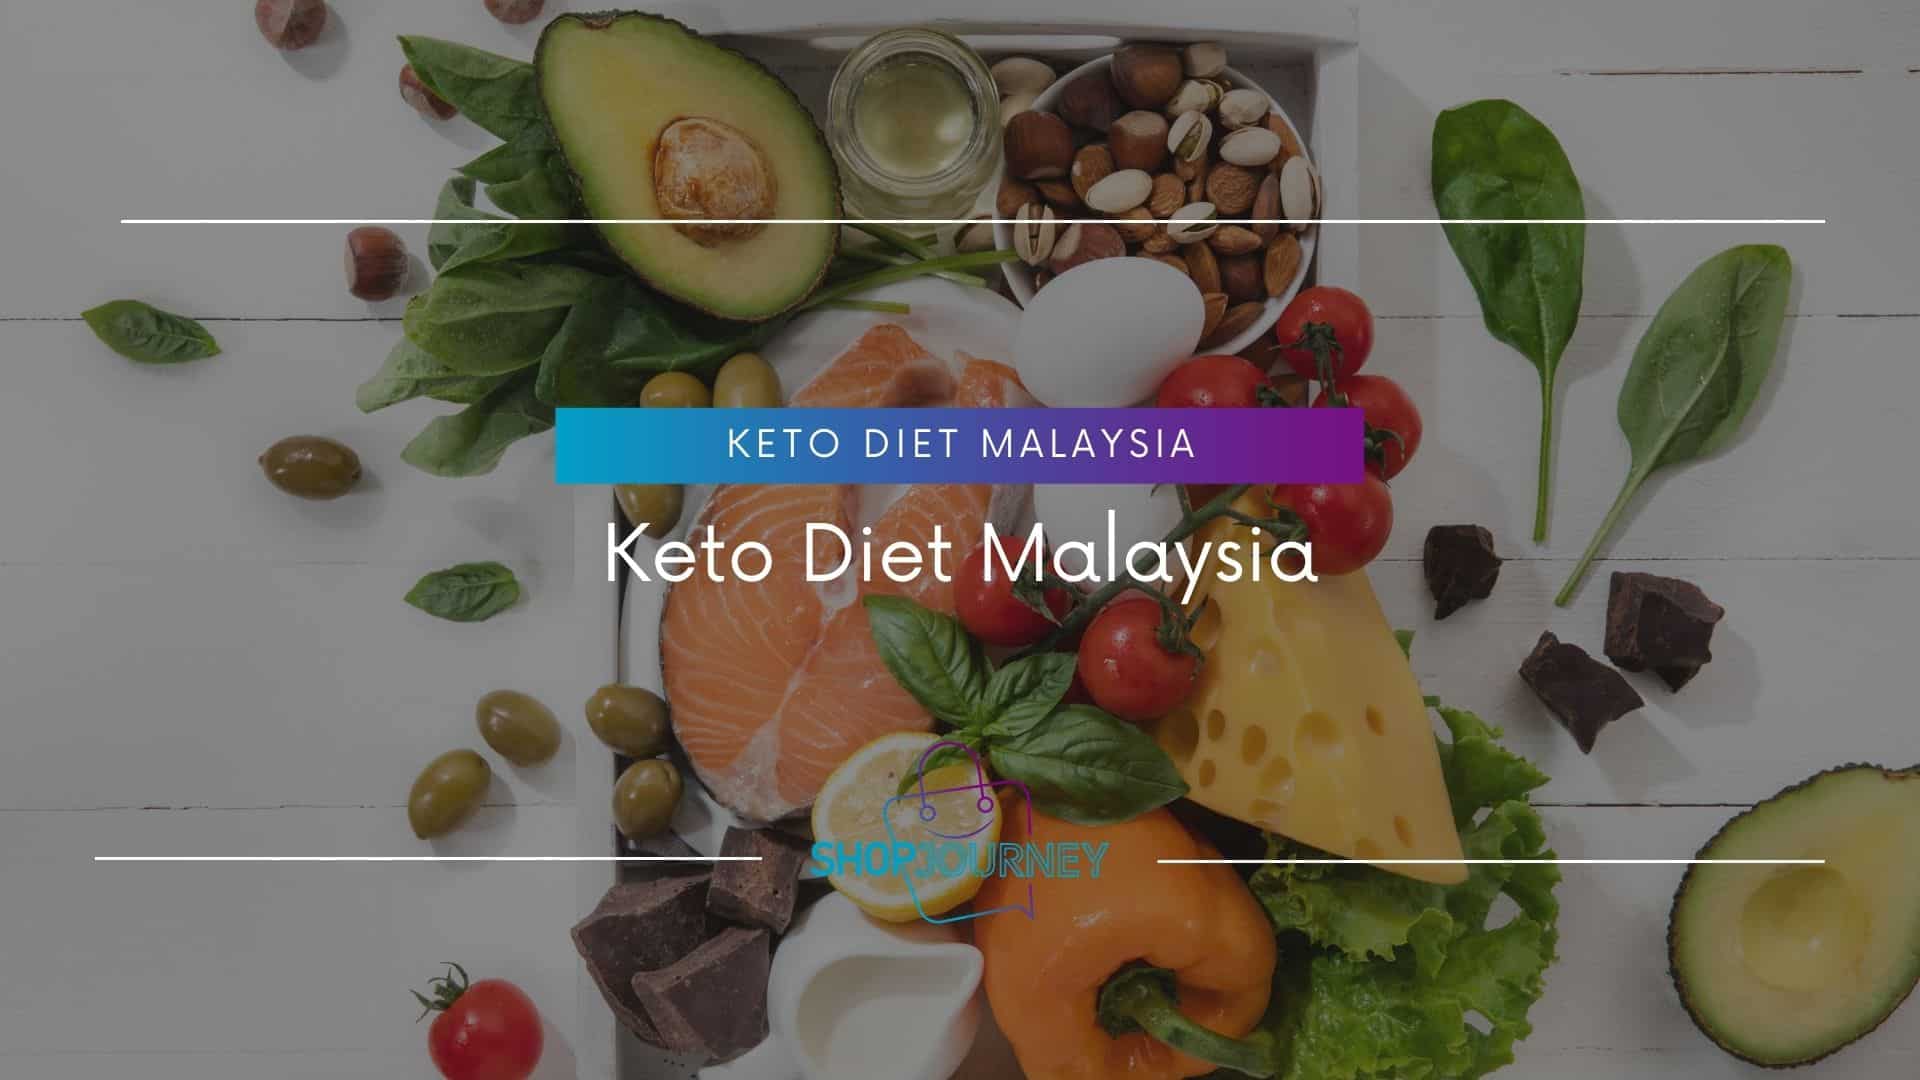 Keto Diet Malaysia - Shop Journey